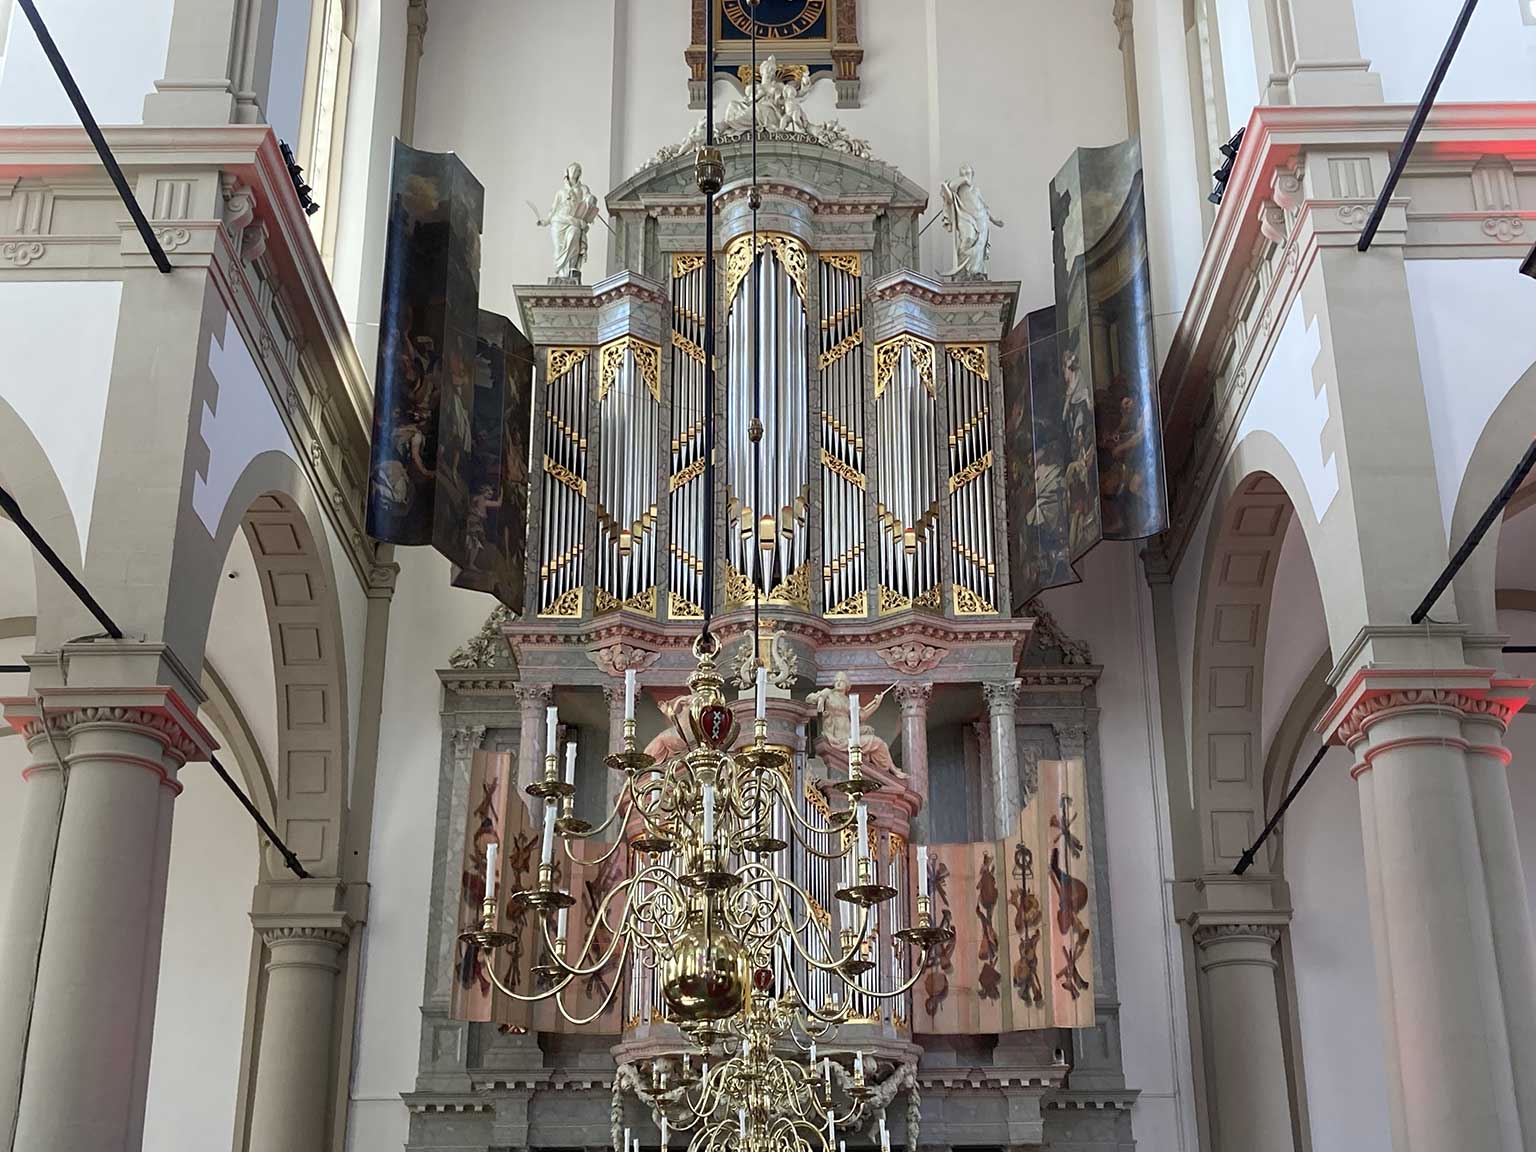 Main organ from 1686 of the Westerkerk, Amsterdam, built by Roelof Barentszn Duyschot